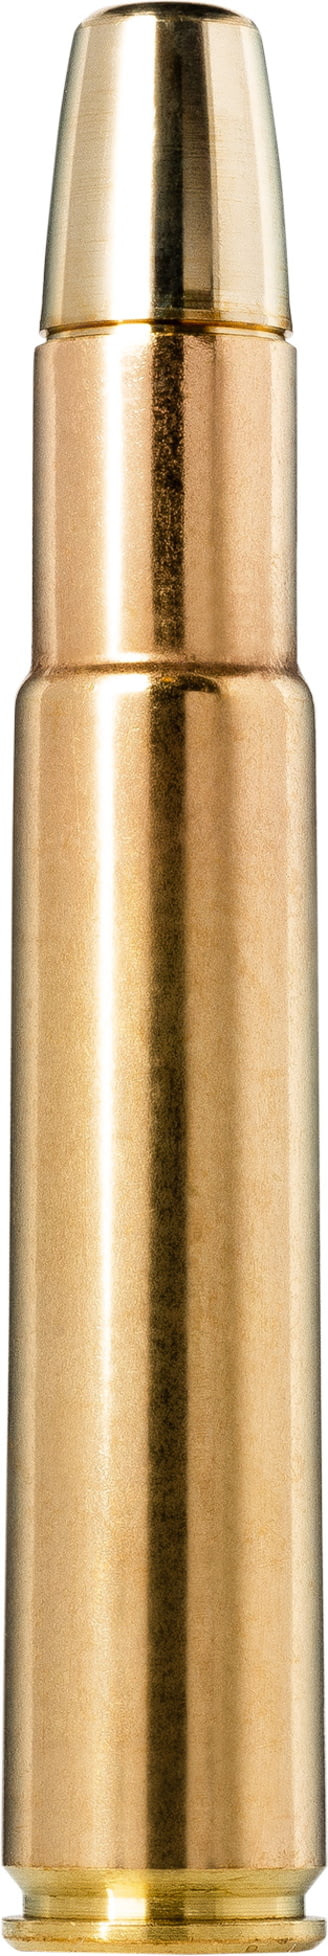 Norma Solid Ammunition .505 Magnum Gibbs 540 Grain Solid Brass Cased Centerfire Rifle Ammunition